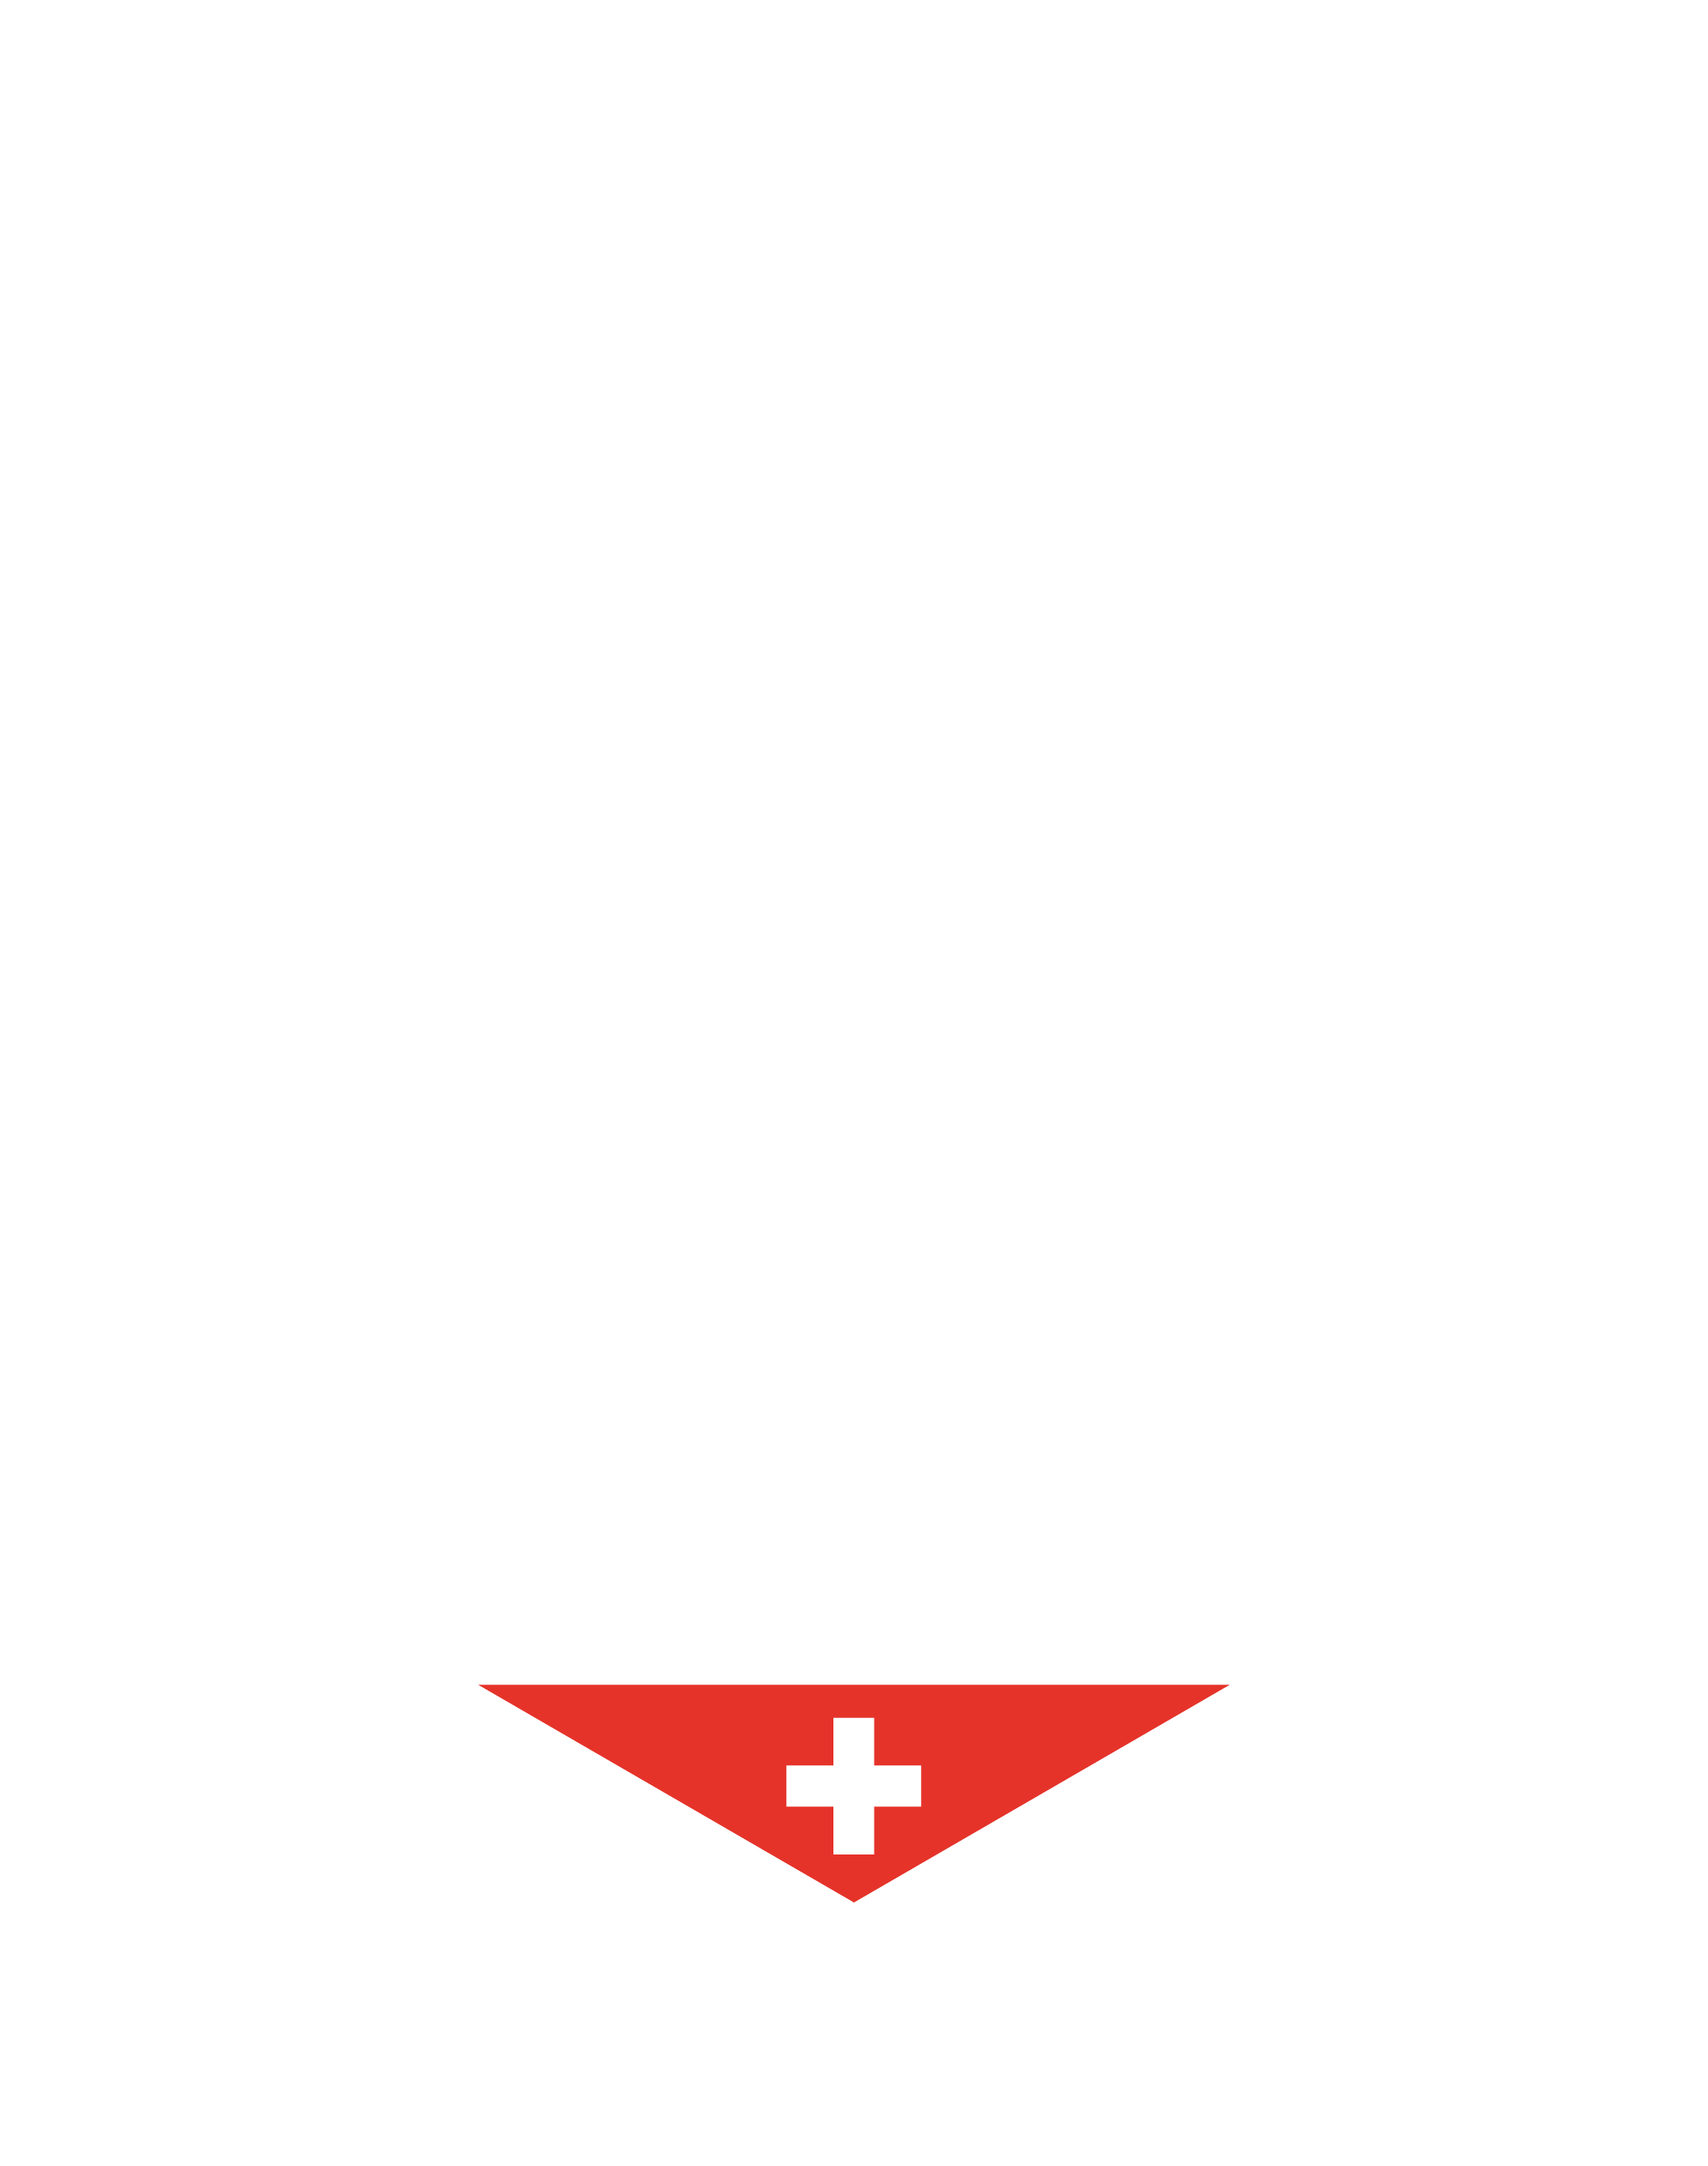 Race Across Switzerland